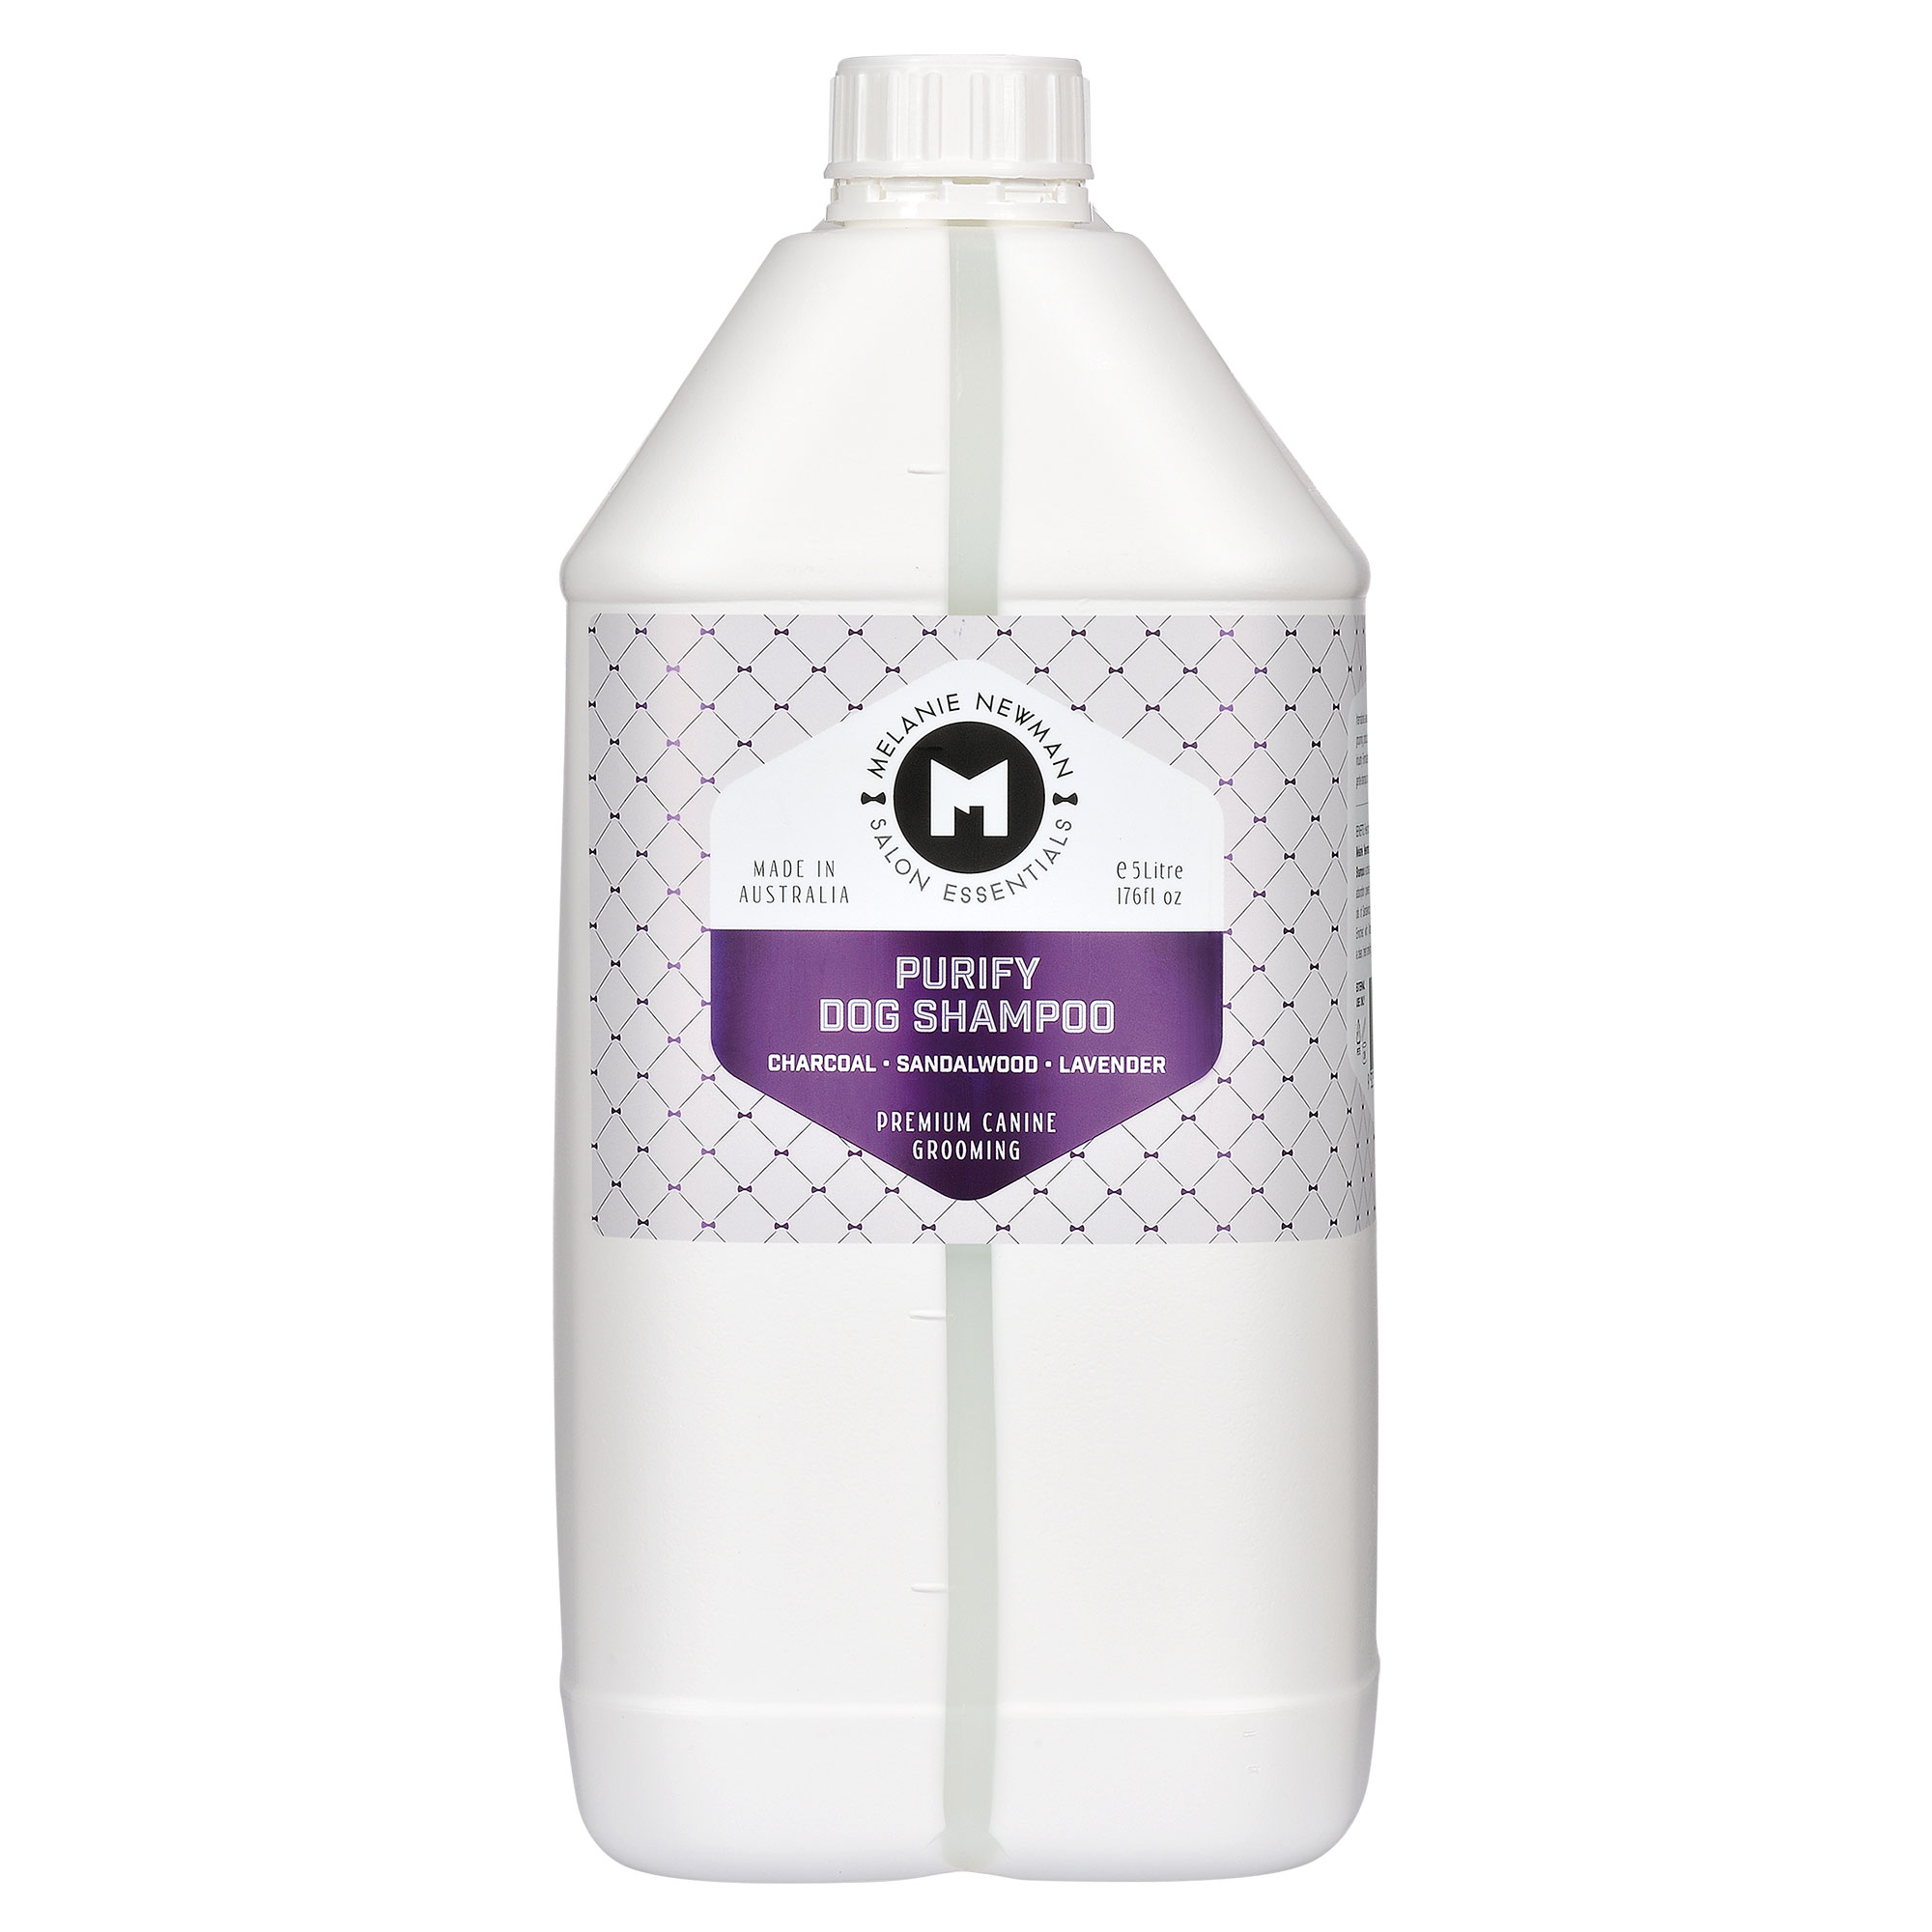 melanie newman purify shampoo 5litre for dog grooming